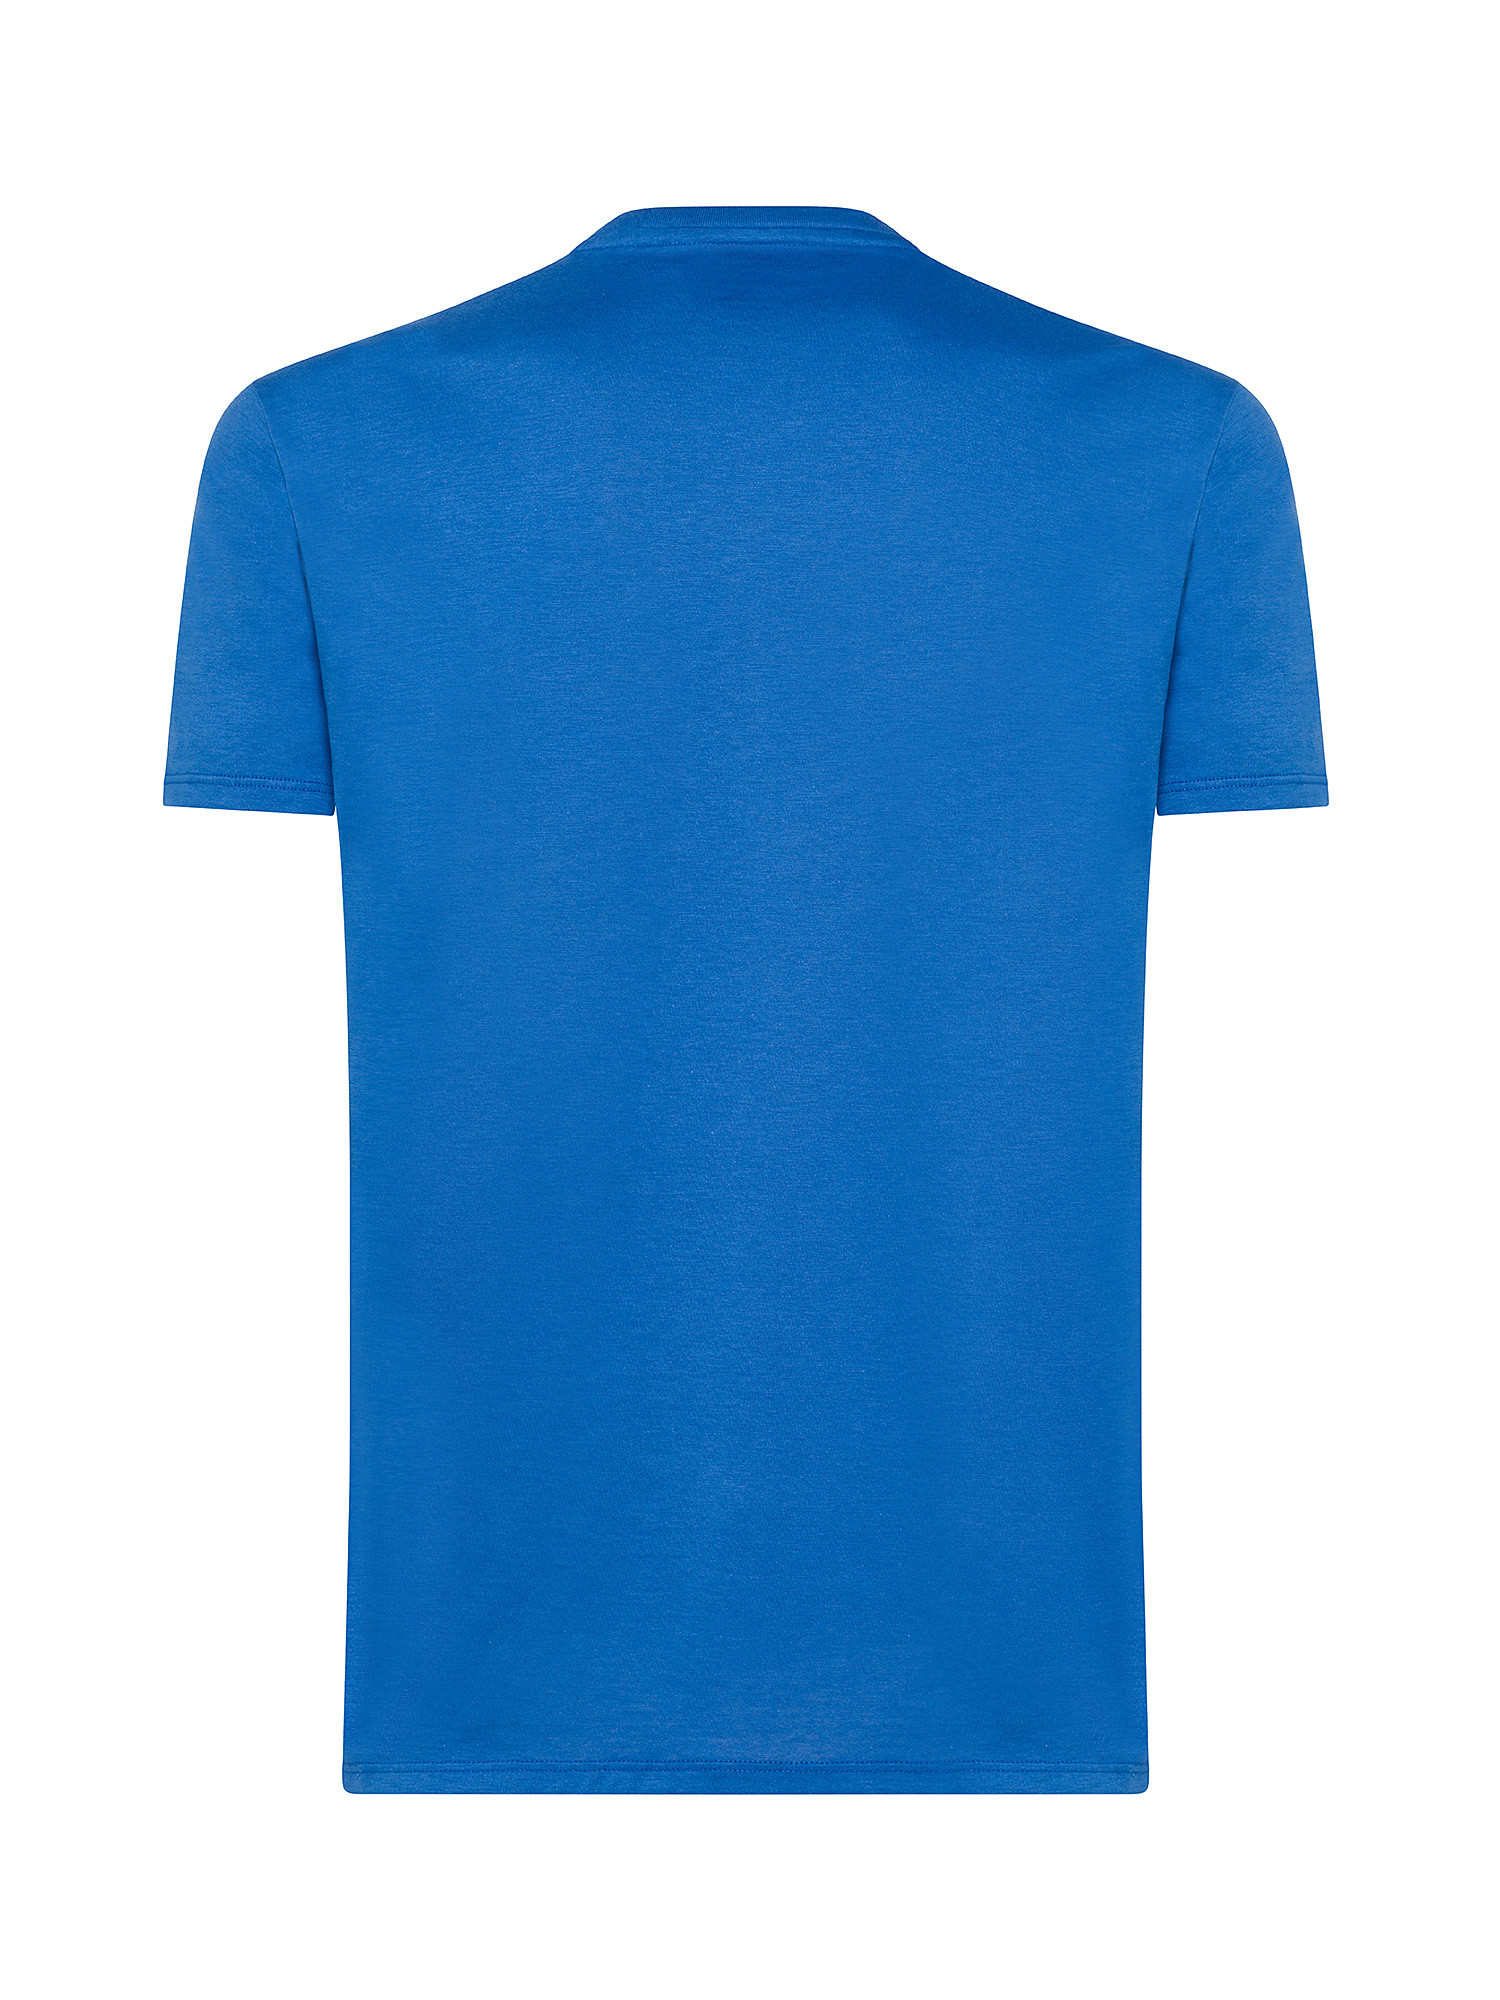 Lacoste - T-shirt girocollo in jersey di cotone Pima, Blu, large image number 1